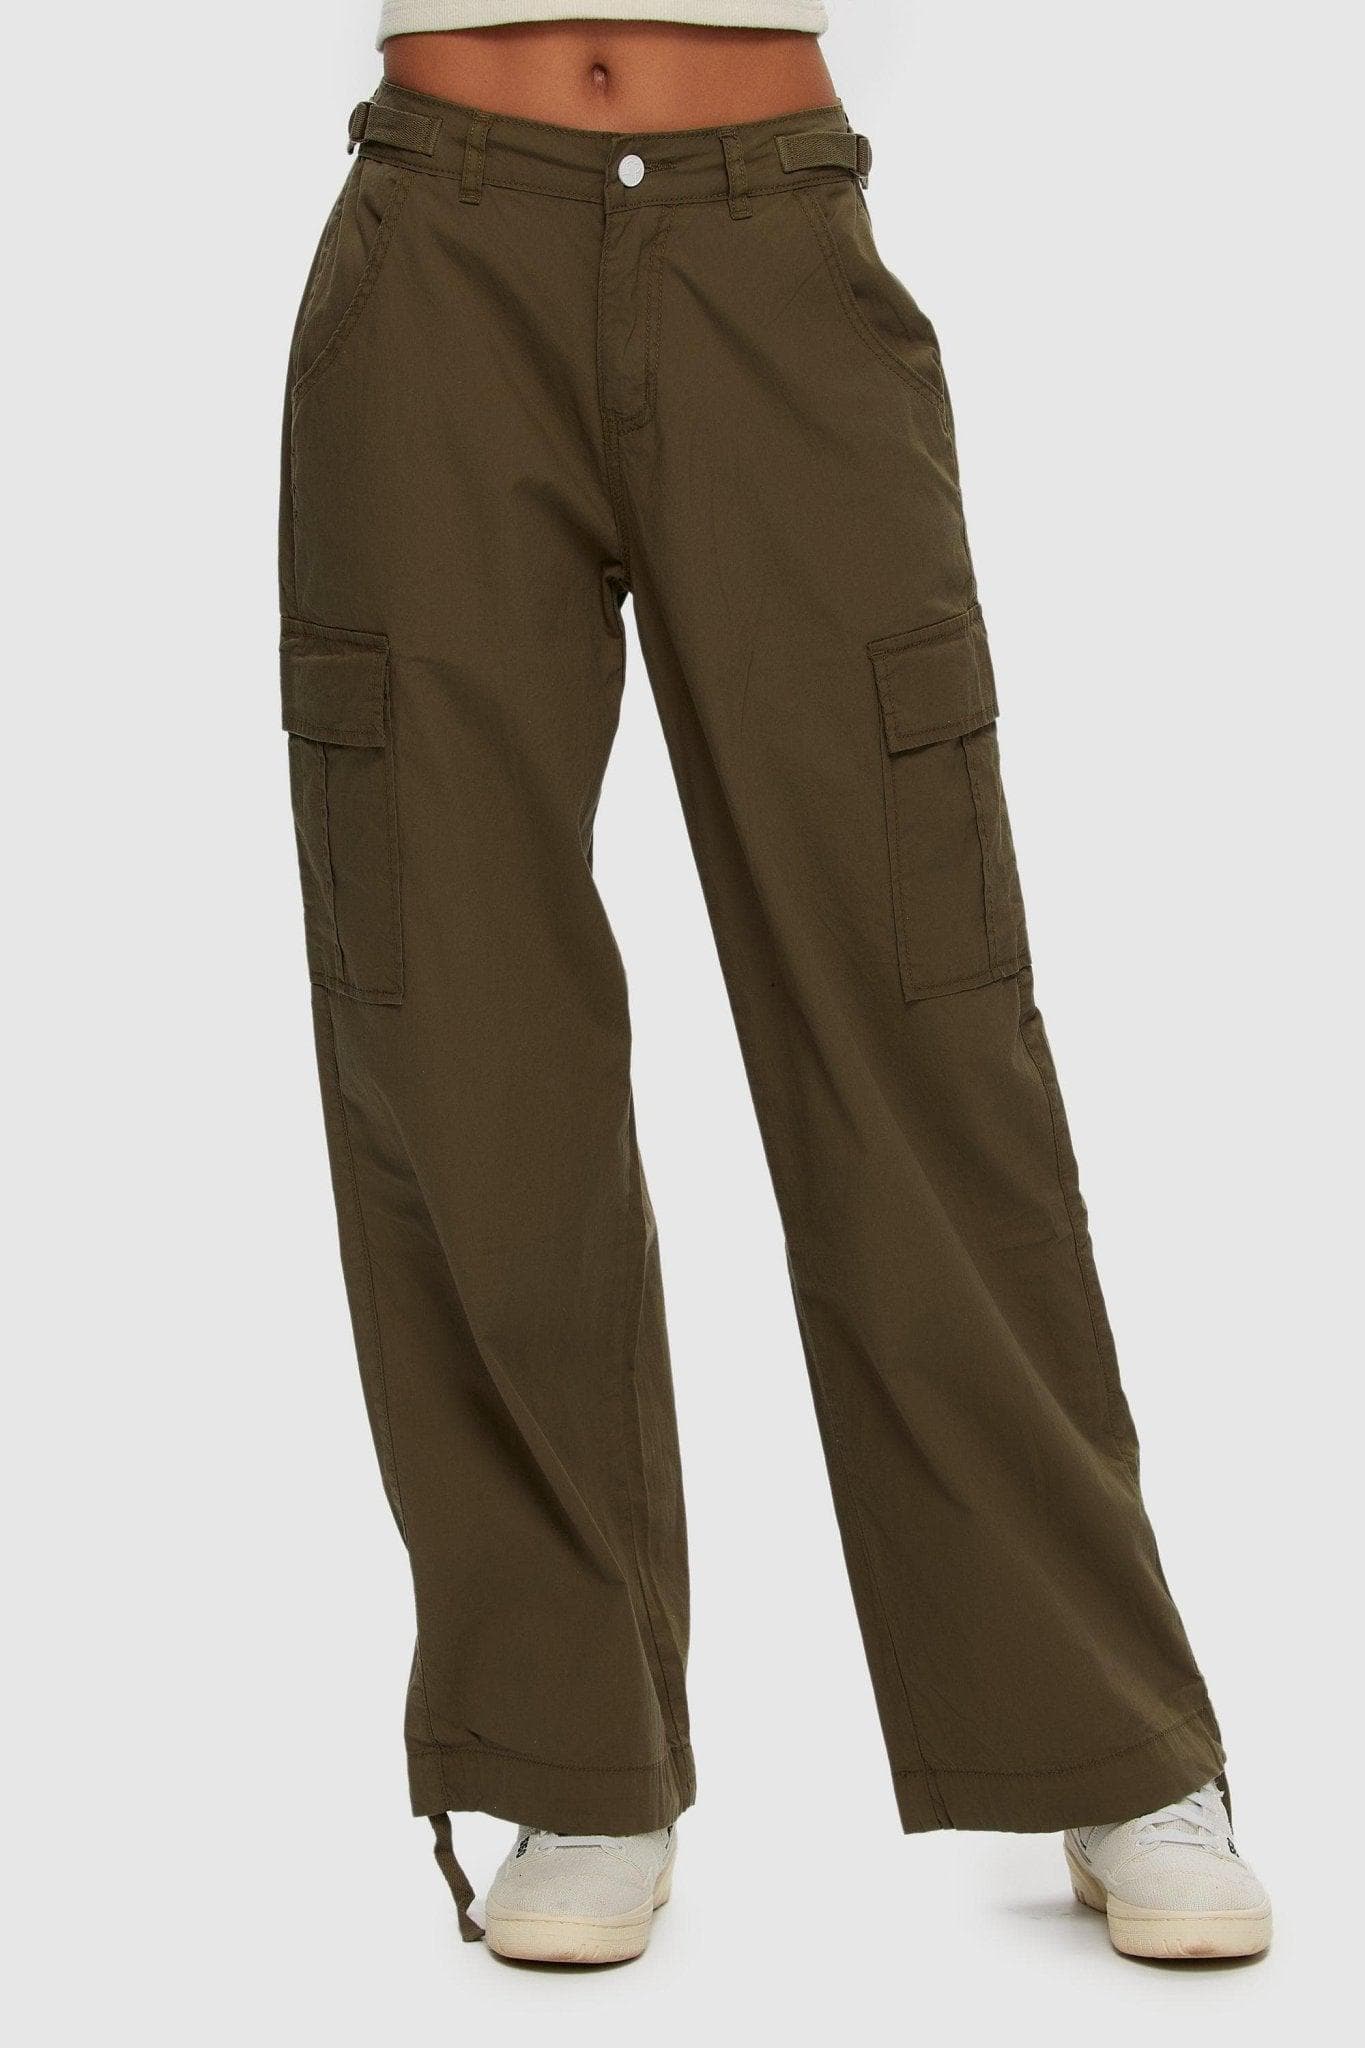 Kameela Cargo Pants - Olive  Plus size baddie outfits, Olive